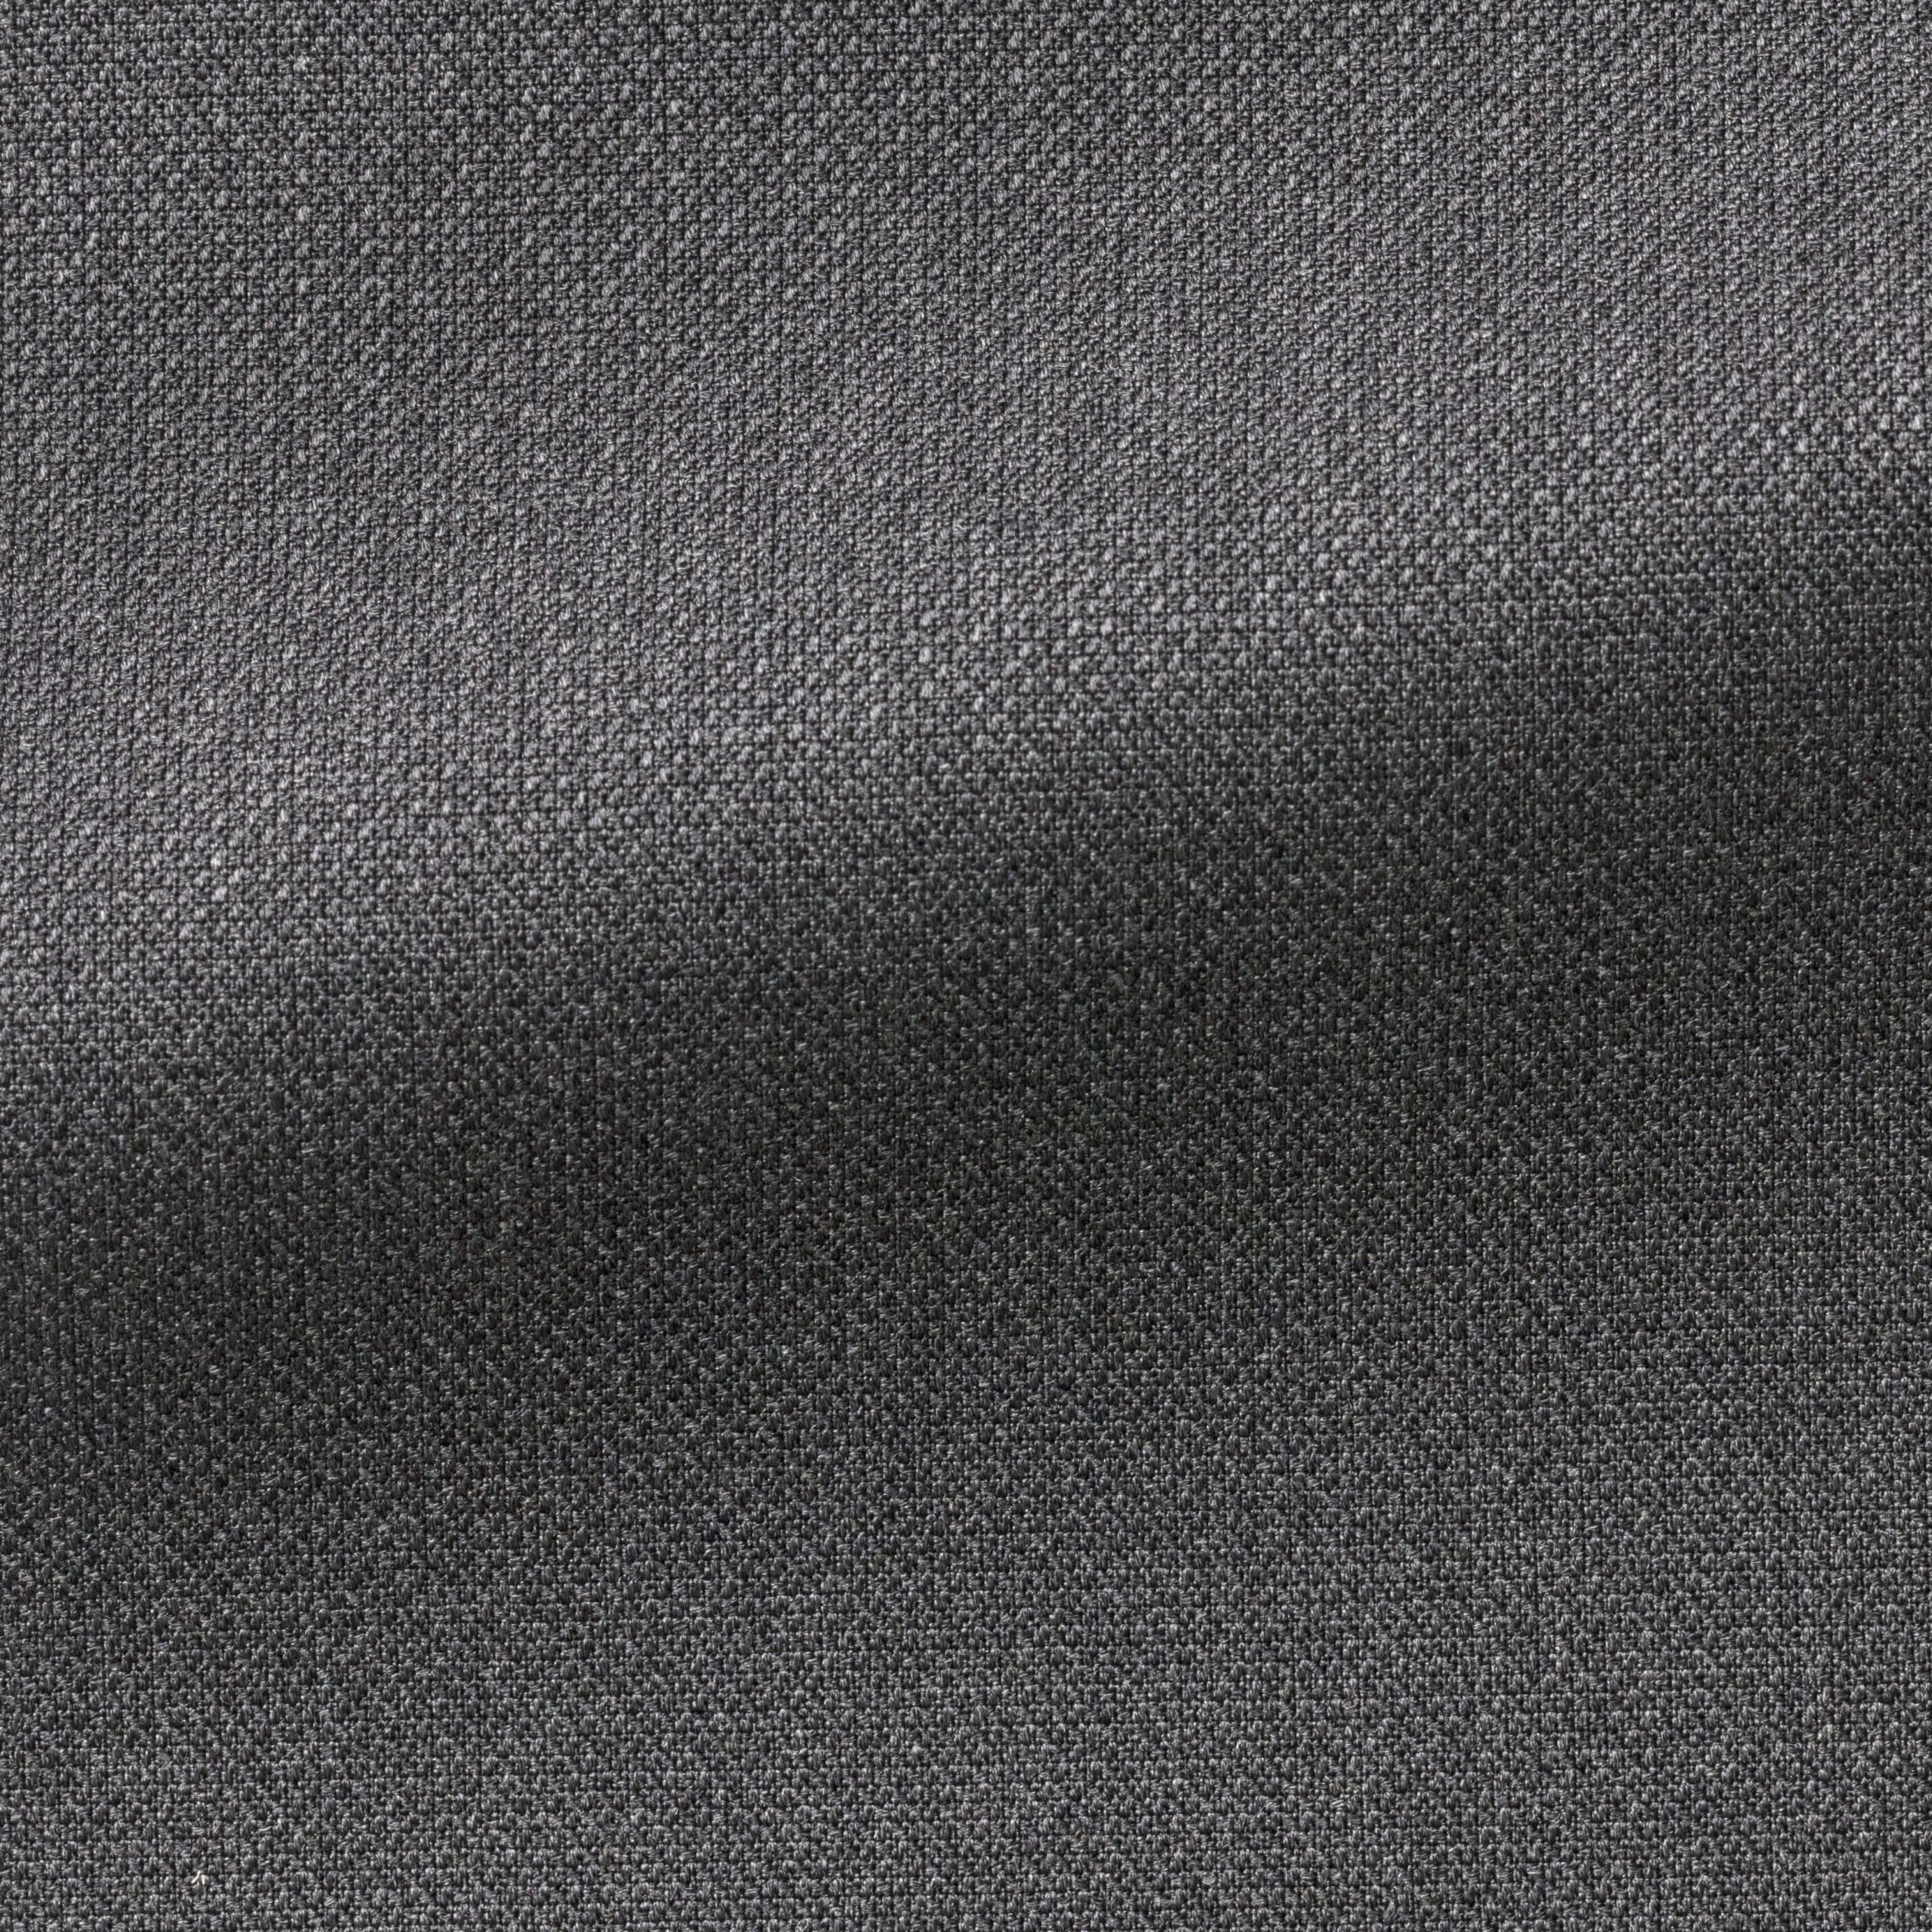 DR027 Fabric Sample image 1